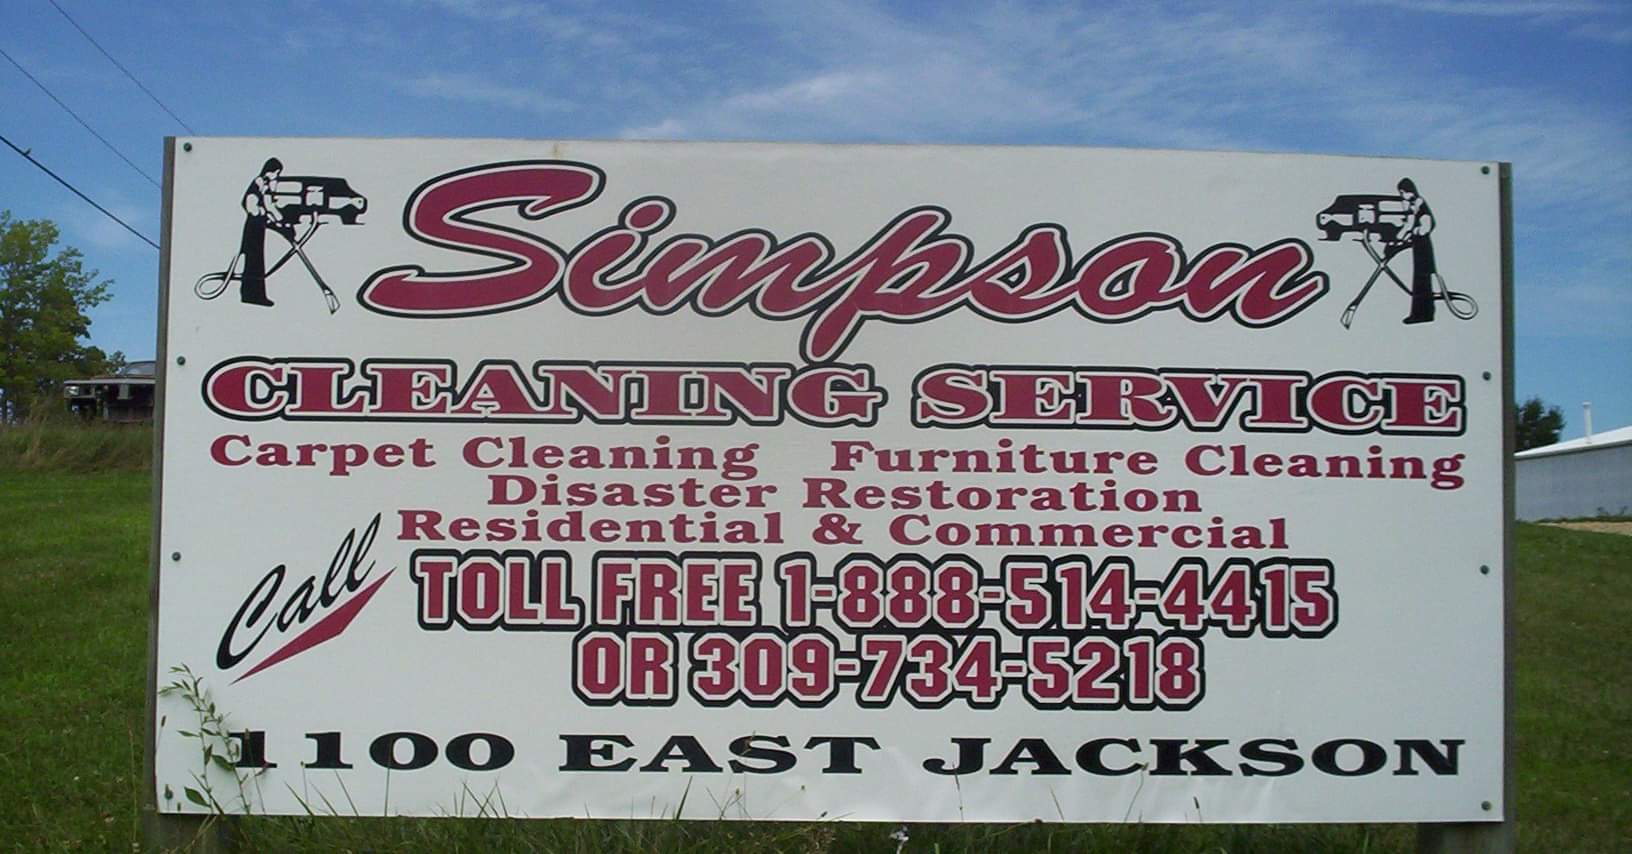 Simpson Cleaning 1100 E Jackson Ave, Monmouth Illinois 61462